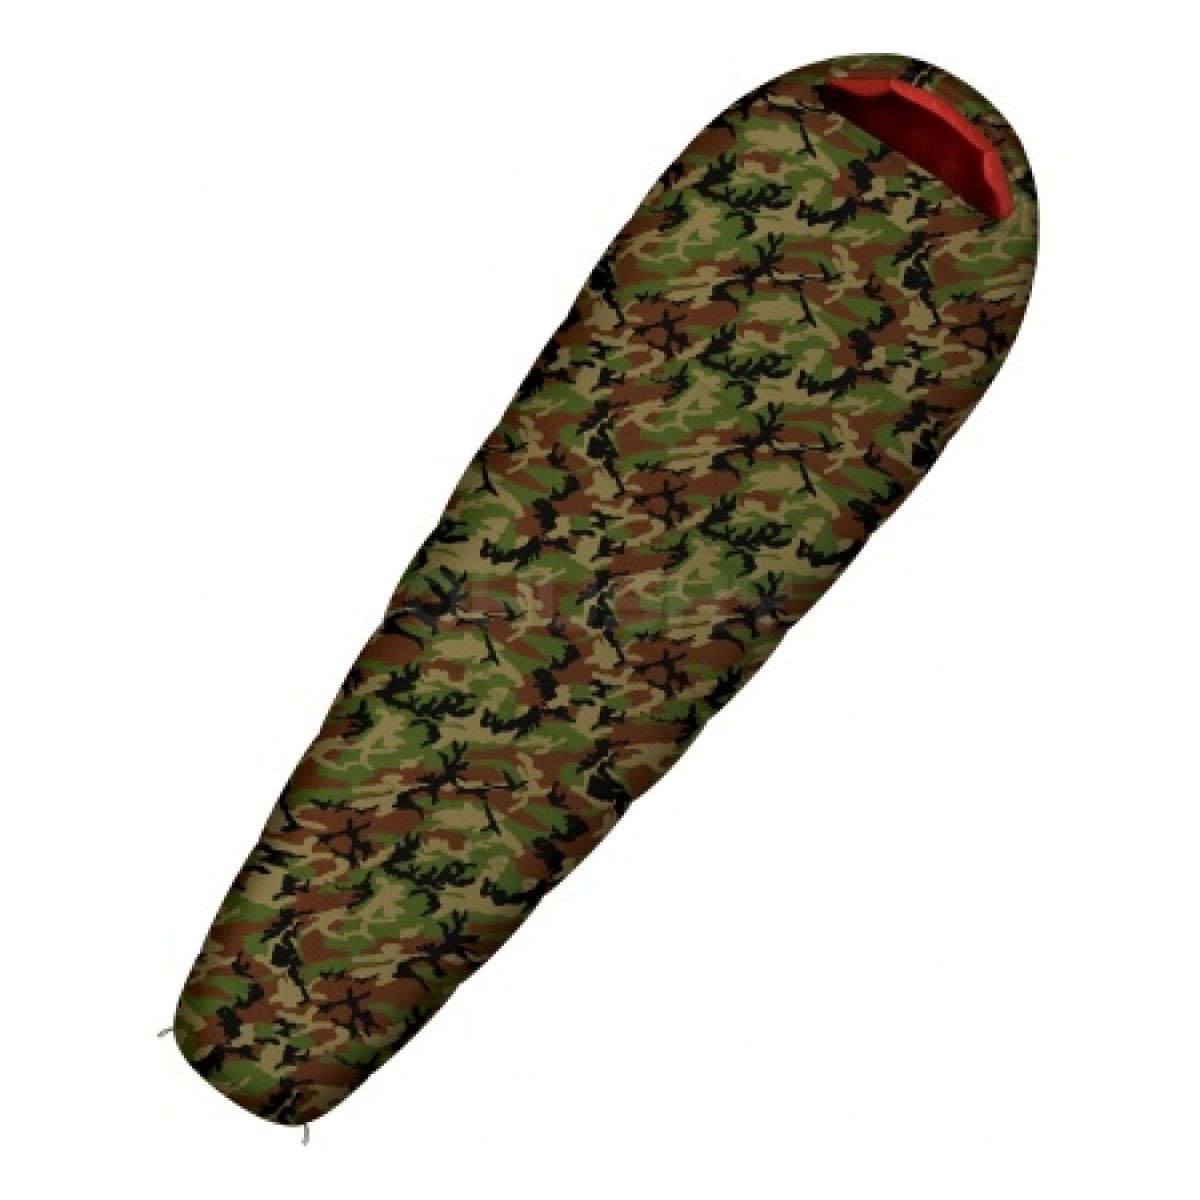 Спален чувал Army Camouflage -17 HUSKY - изглед 2